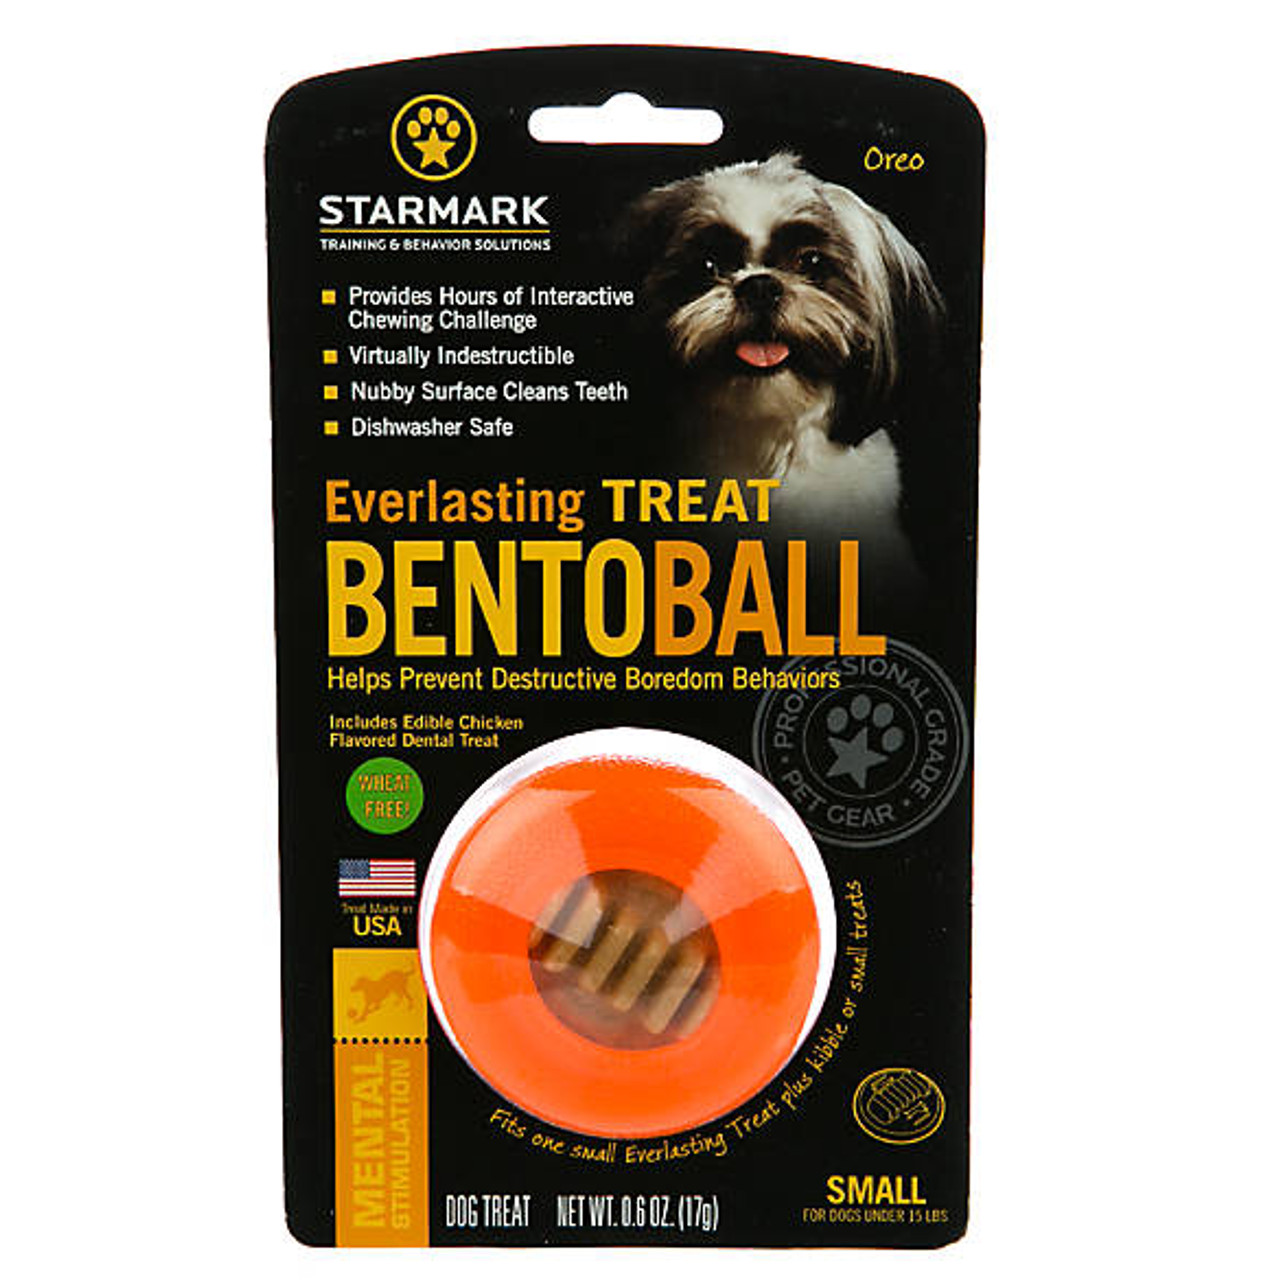 Starmark Treat Dispensing Chew Ball Dog Toy